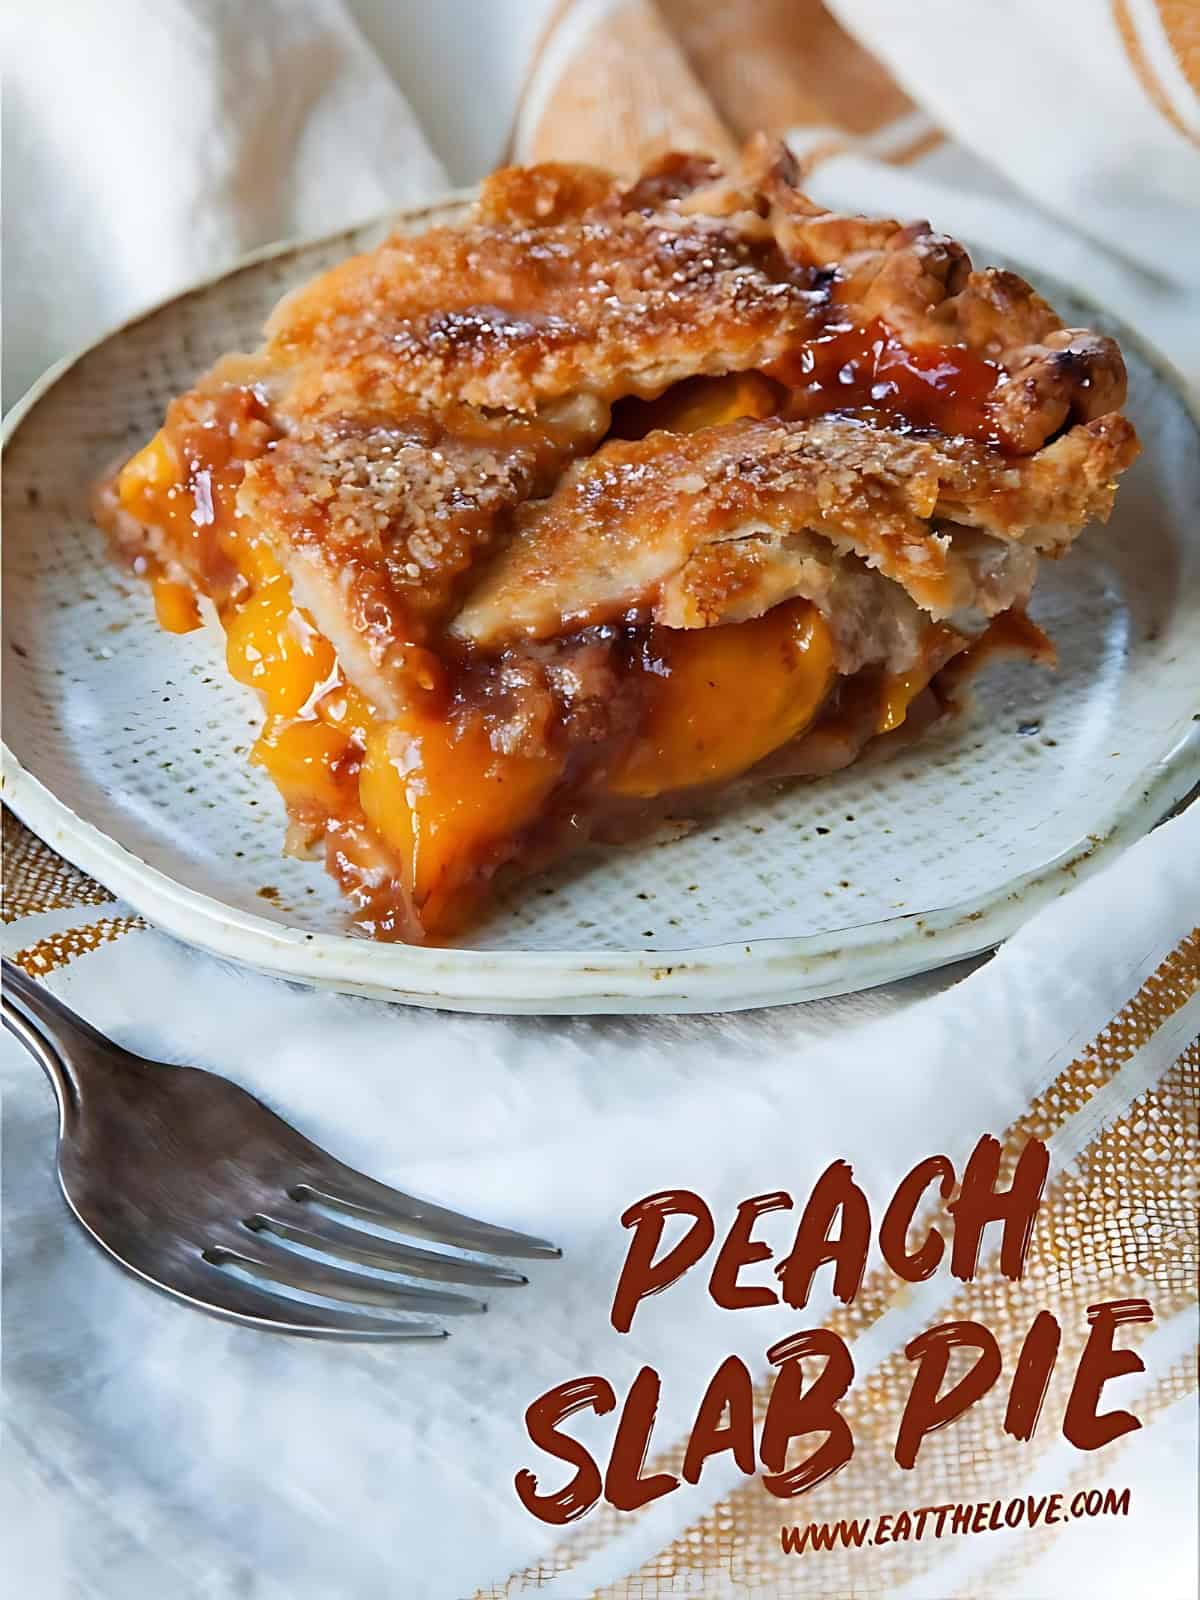 A slice of caramelized peach slab pie on a plate.